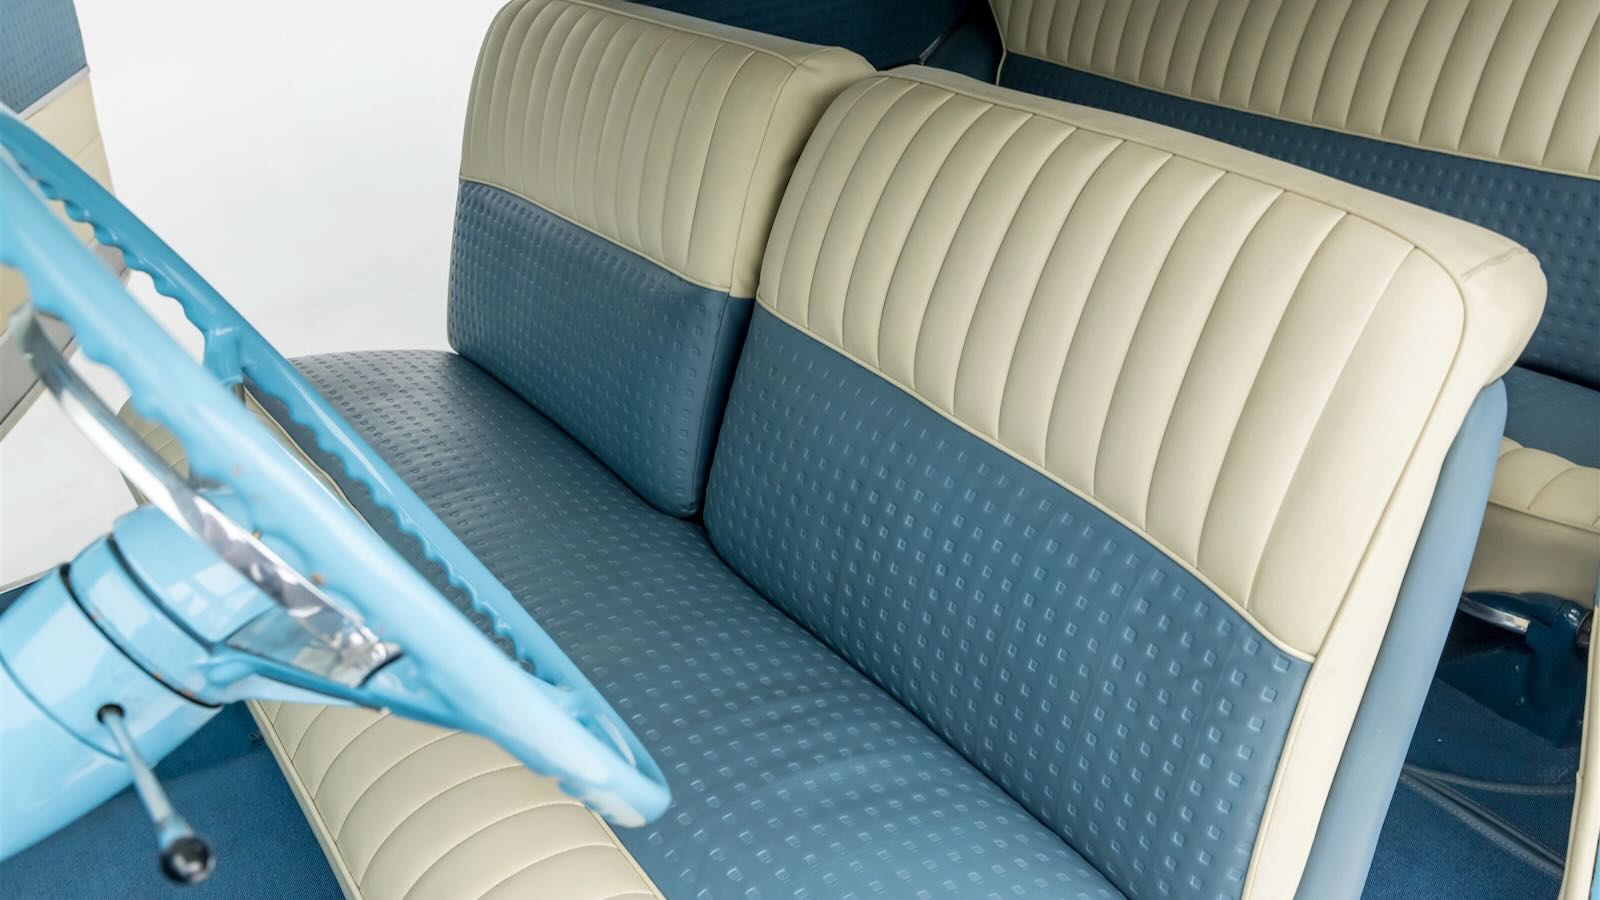 Chevrolet-Bel-Air-Nomad-1955-interior-1.